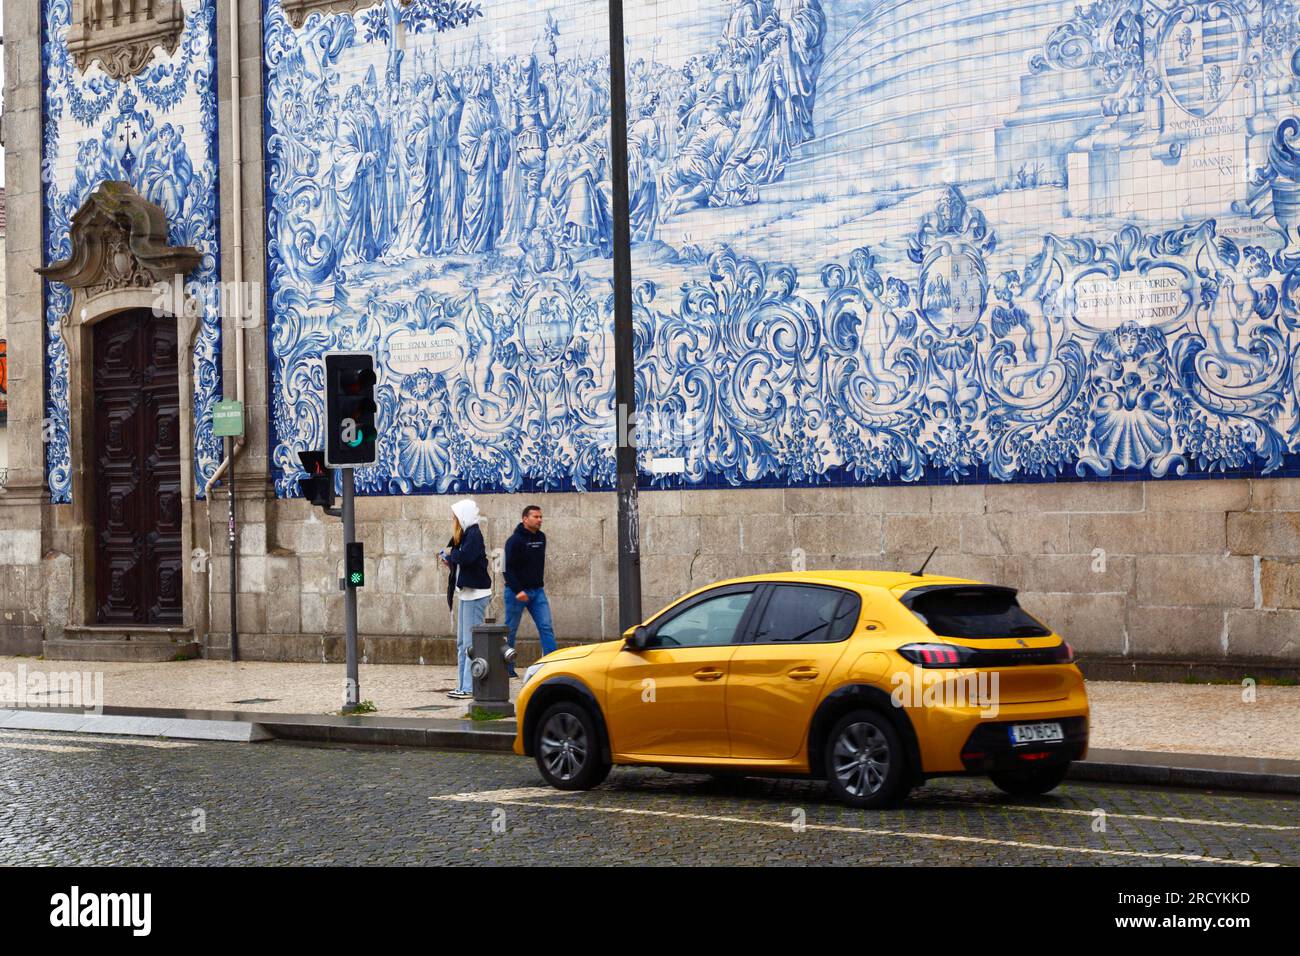 Yellow car driving past the azulejos / ceramic tiles on the side wall of Igreja do Carmo church, Porto / Oporto, Portugal Stock Photo